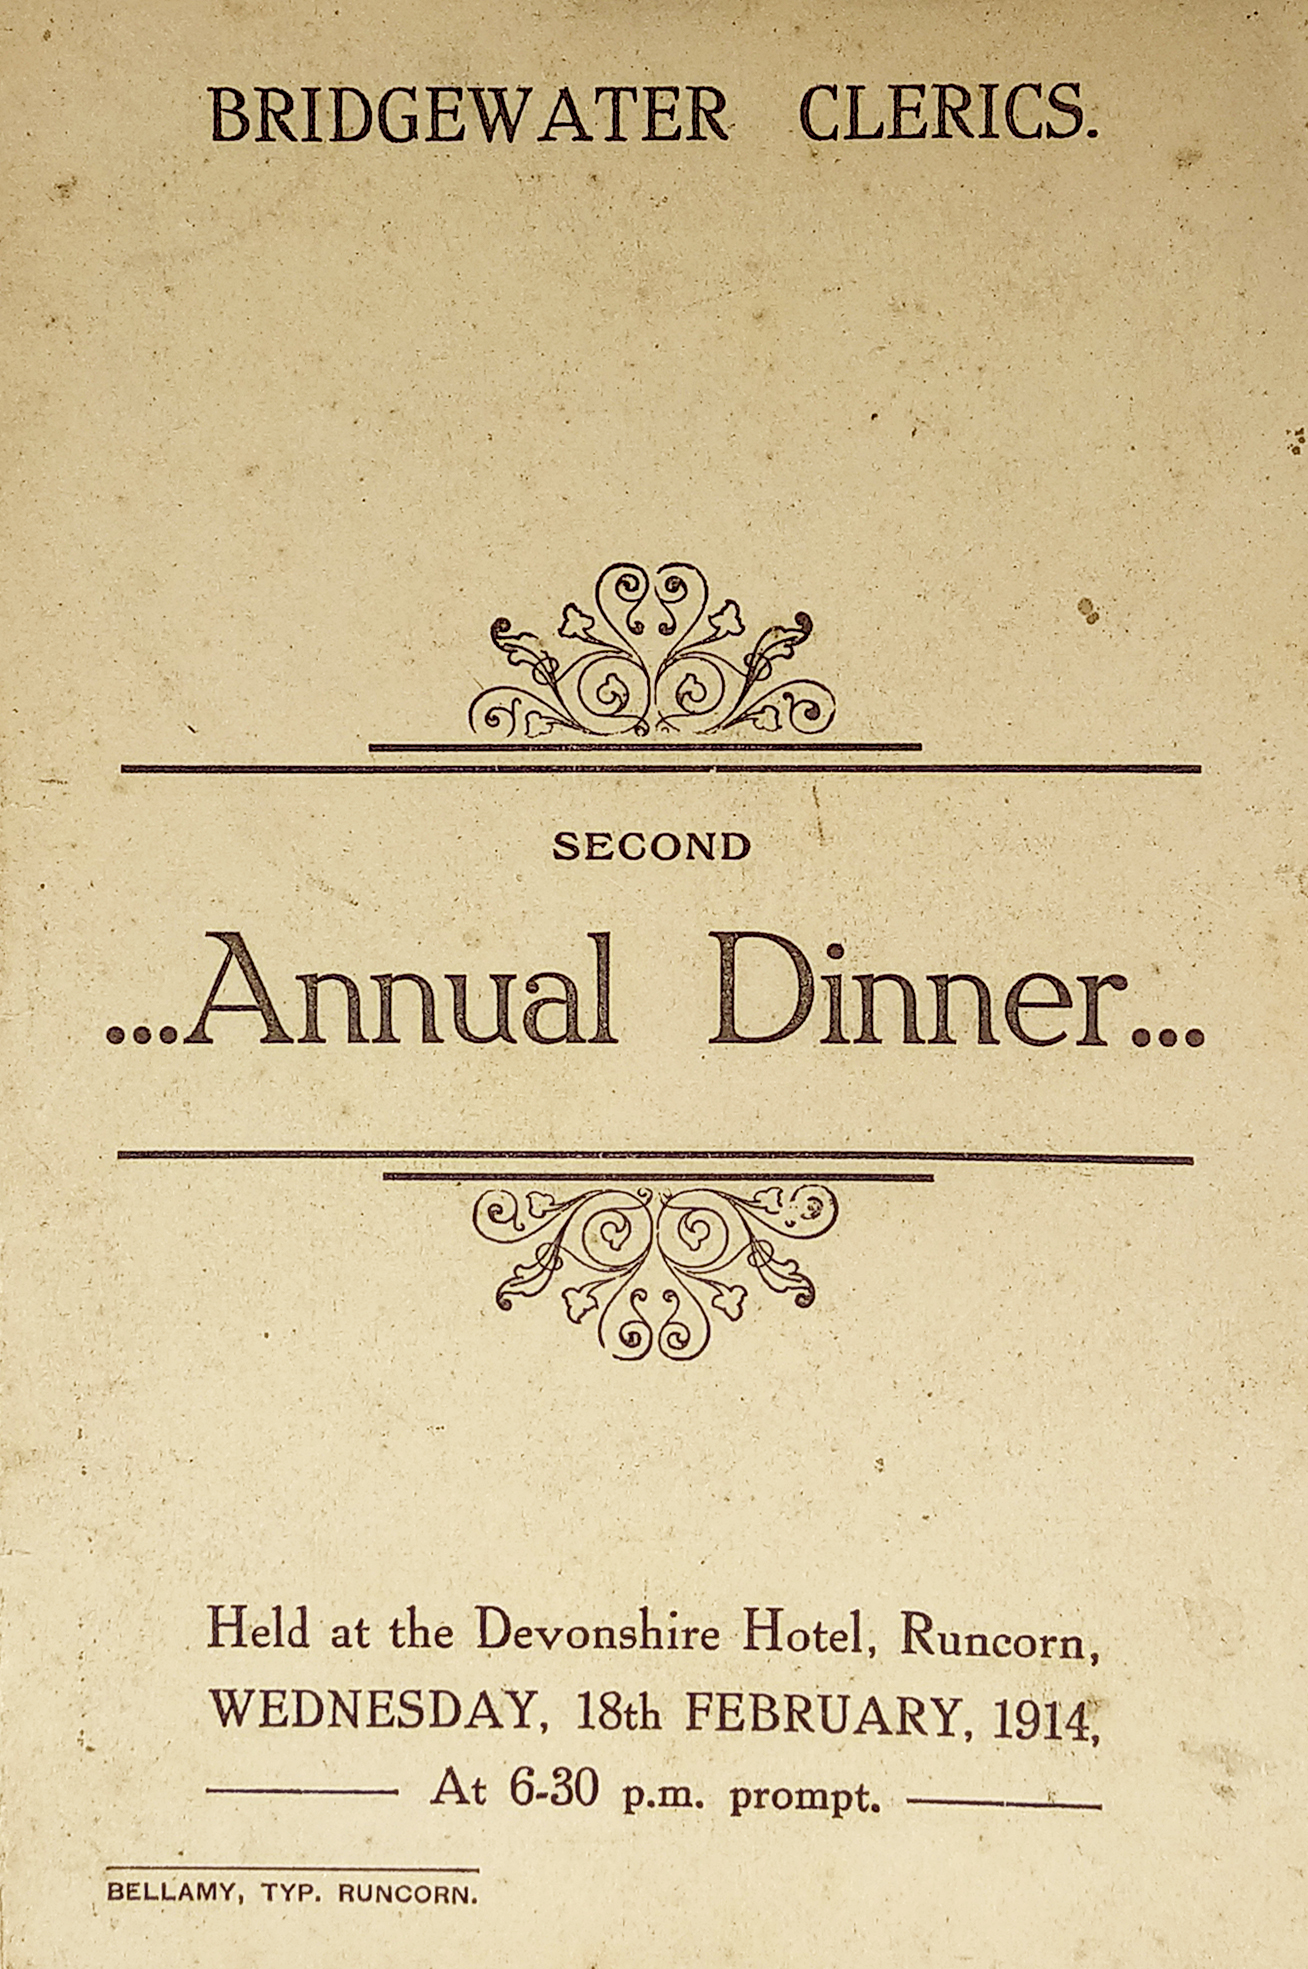 Bridgewater Clerics Second Annual Dinner - Antique Print from 1914